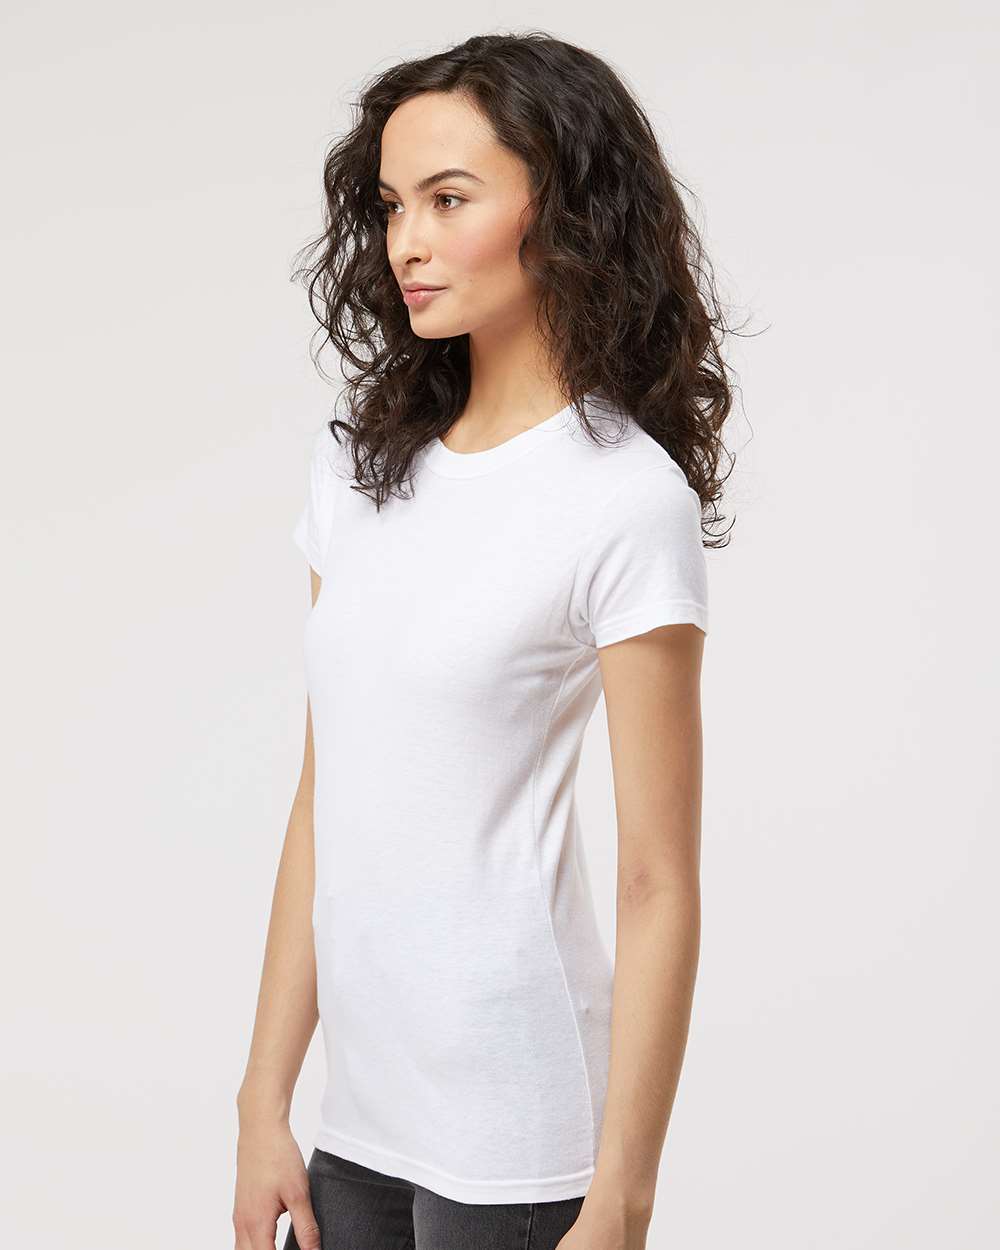 M&O Women's Fine Jersey T-Shirt 4513 #colormdl_Fine White